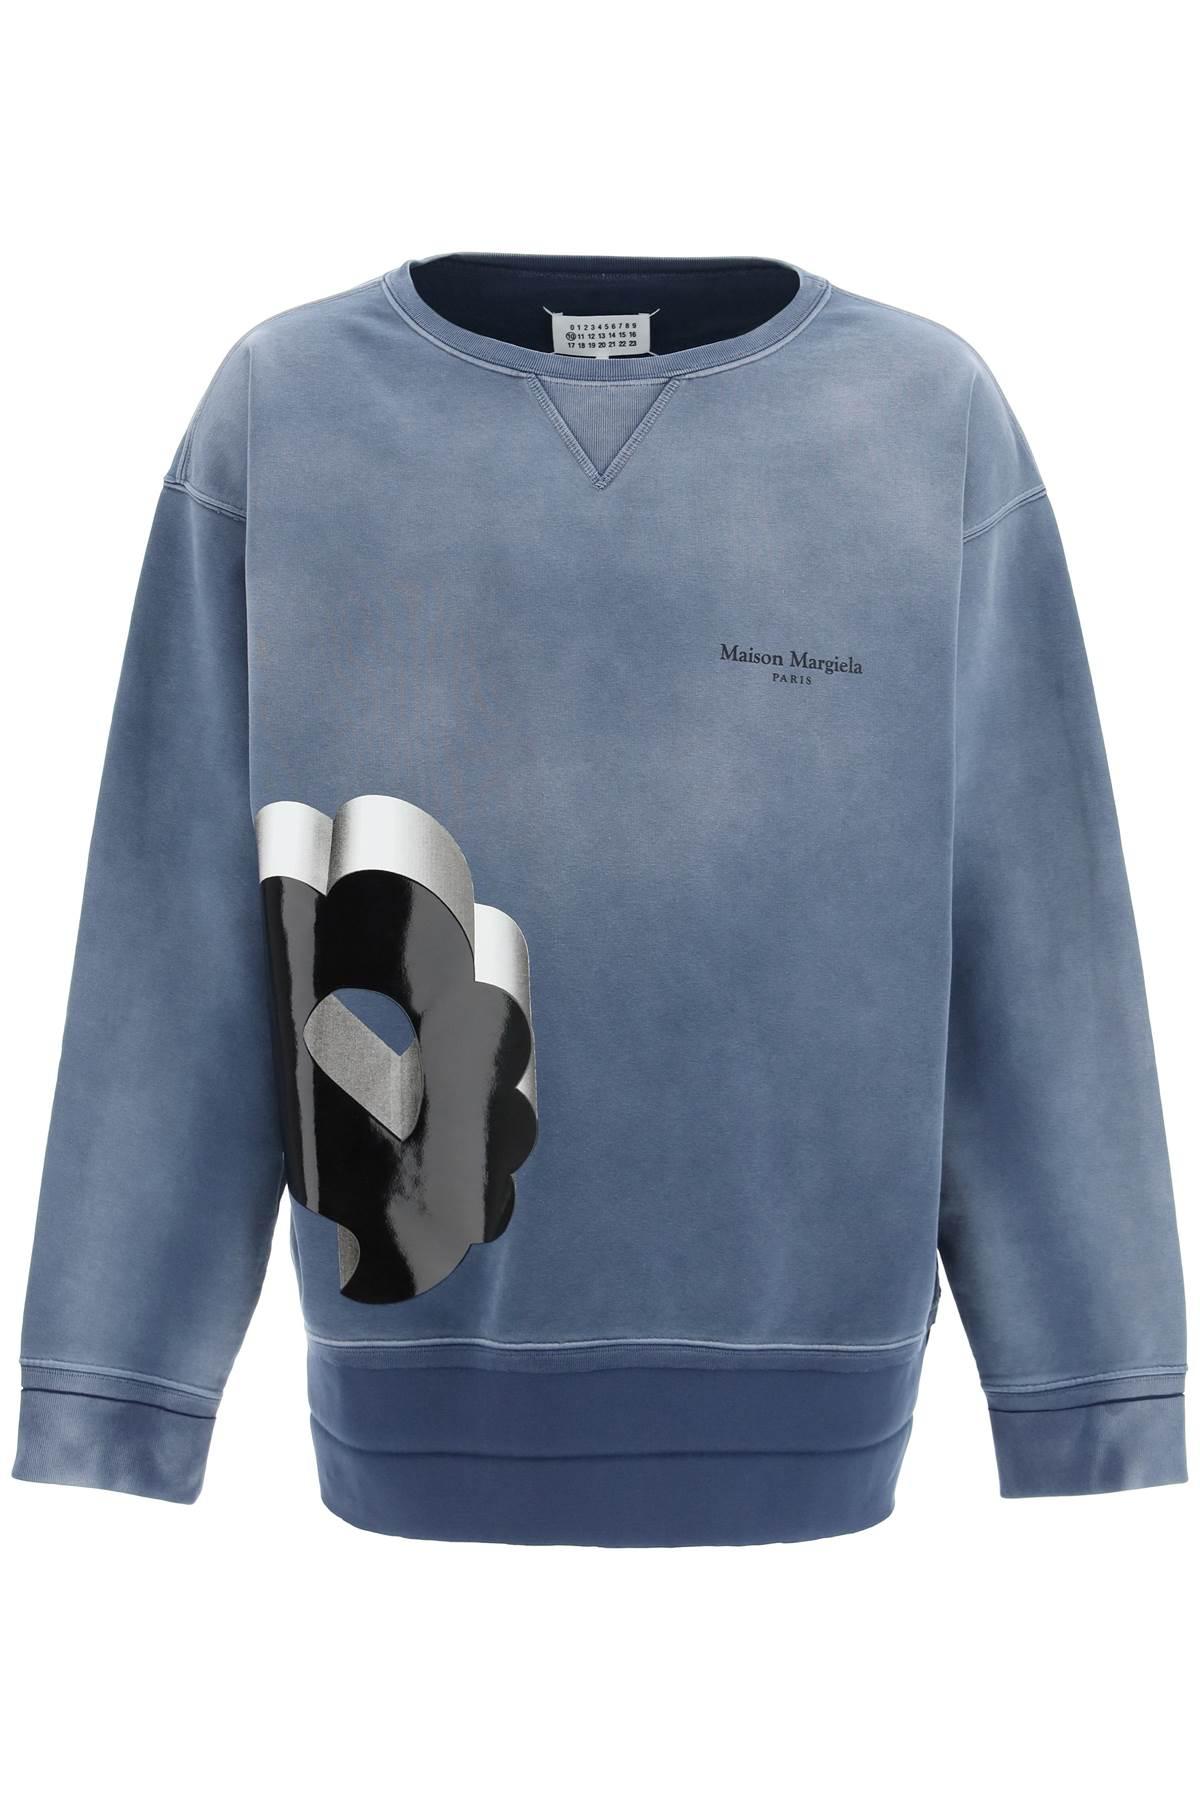 Maison Margiela Sweatshirt With Logo Graphic in Blue for Men